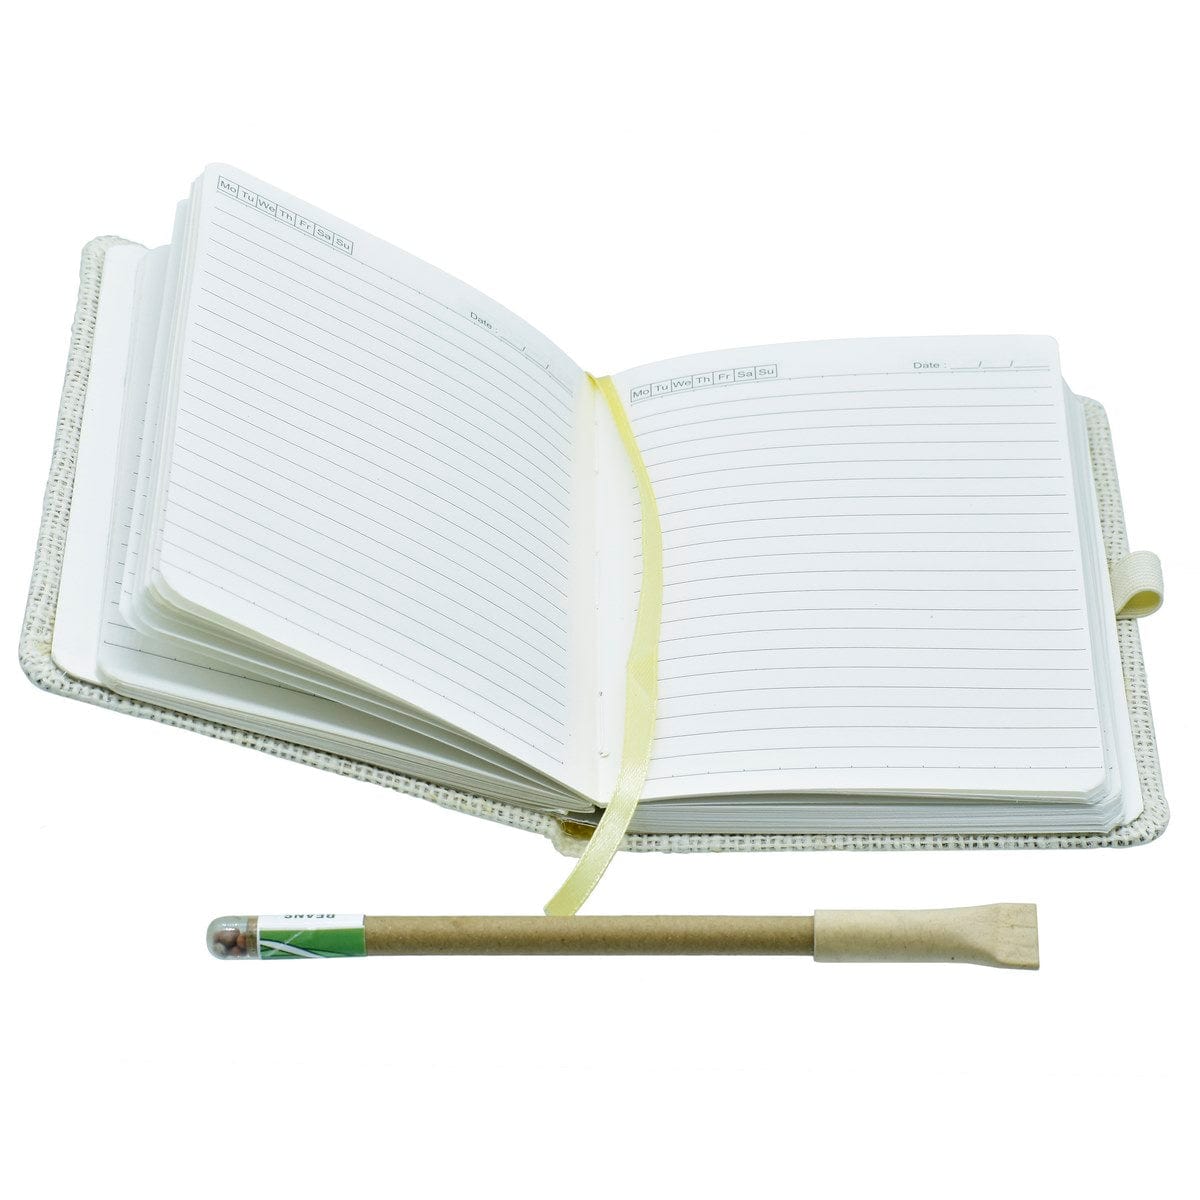 jags-mumbai Formal Diary Burlap Jute Notebook journal aesthetic | A6 I undated journal eco-friendly